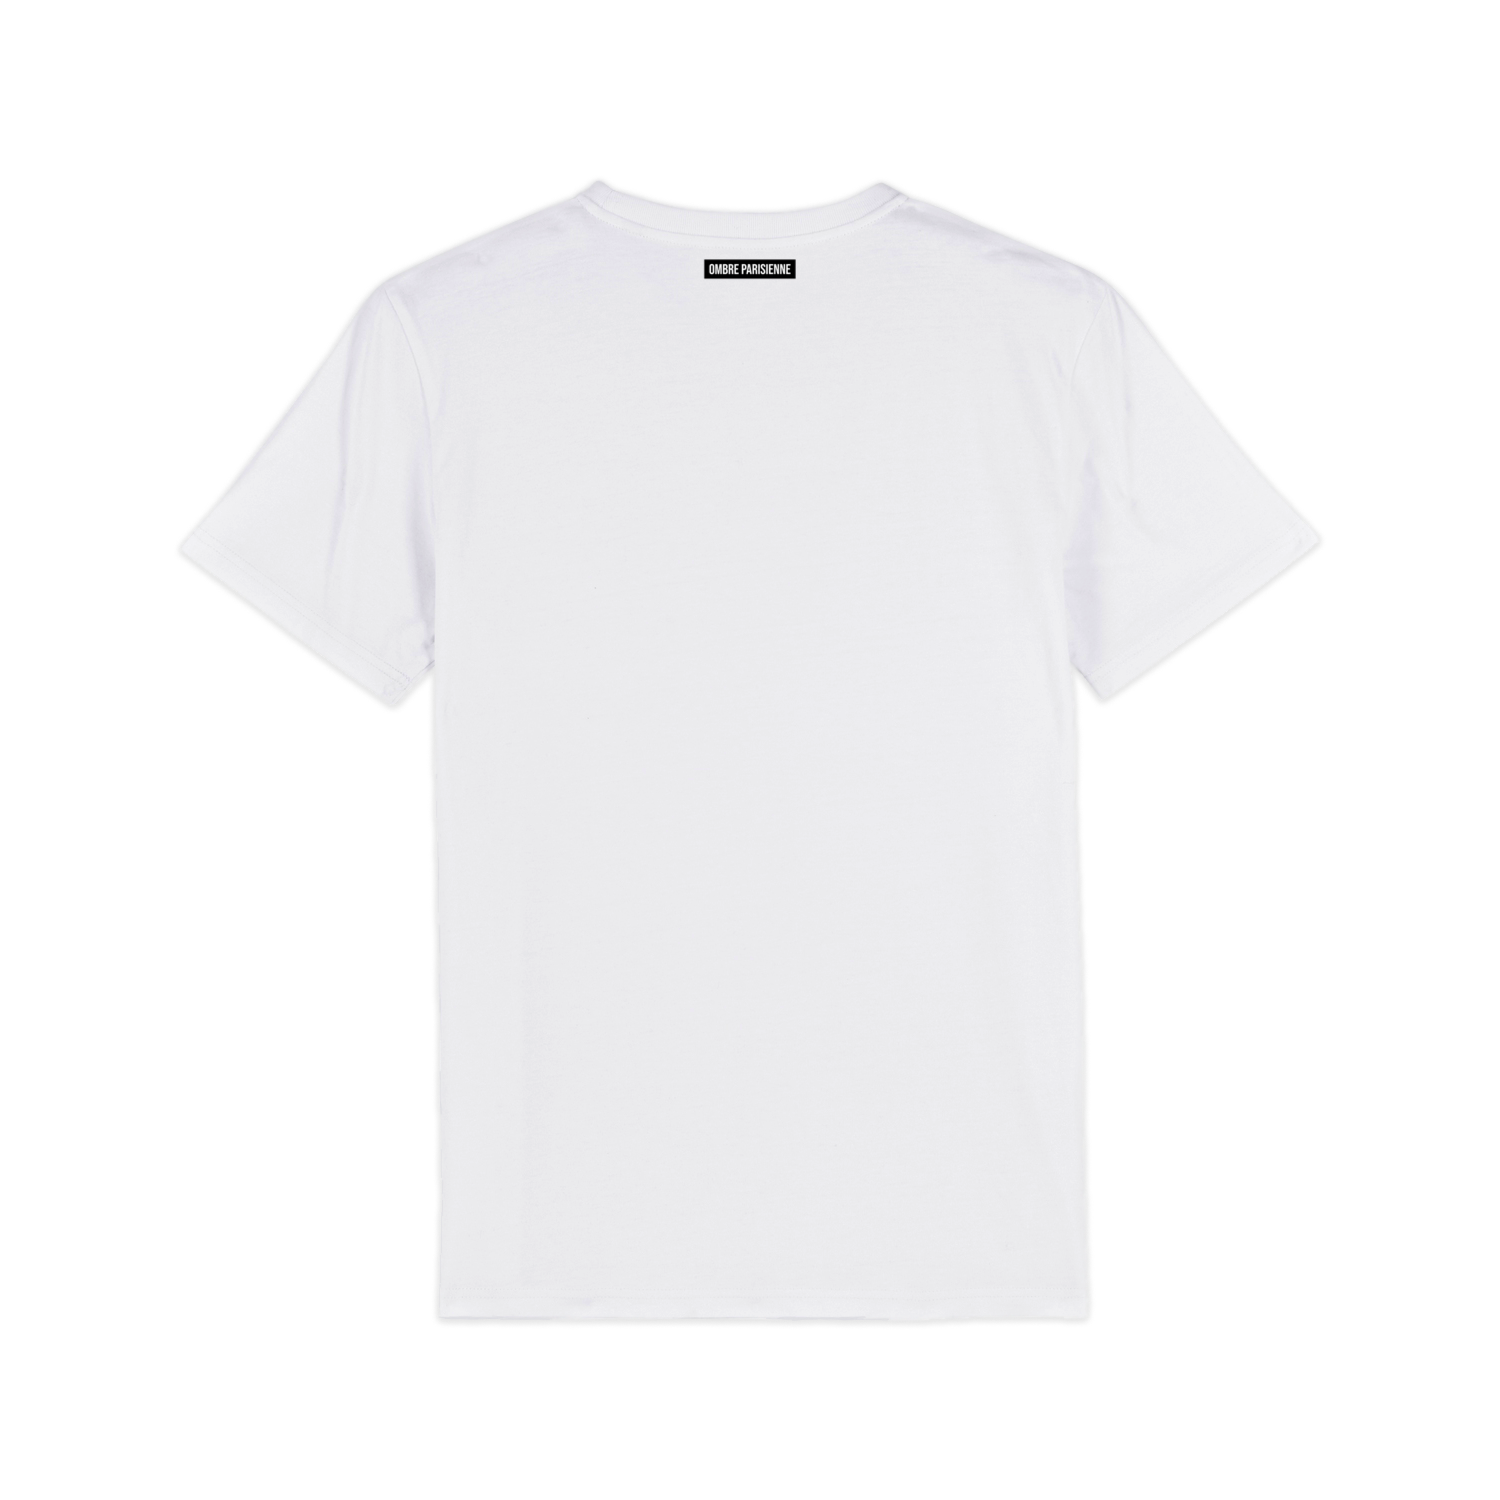 T-shirt College - White - Ombre Parisienne